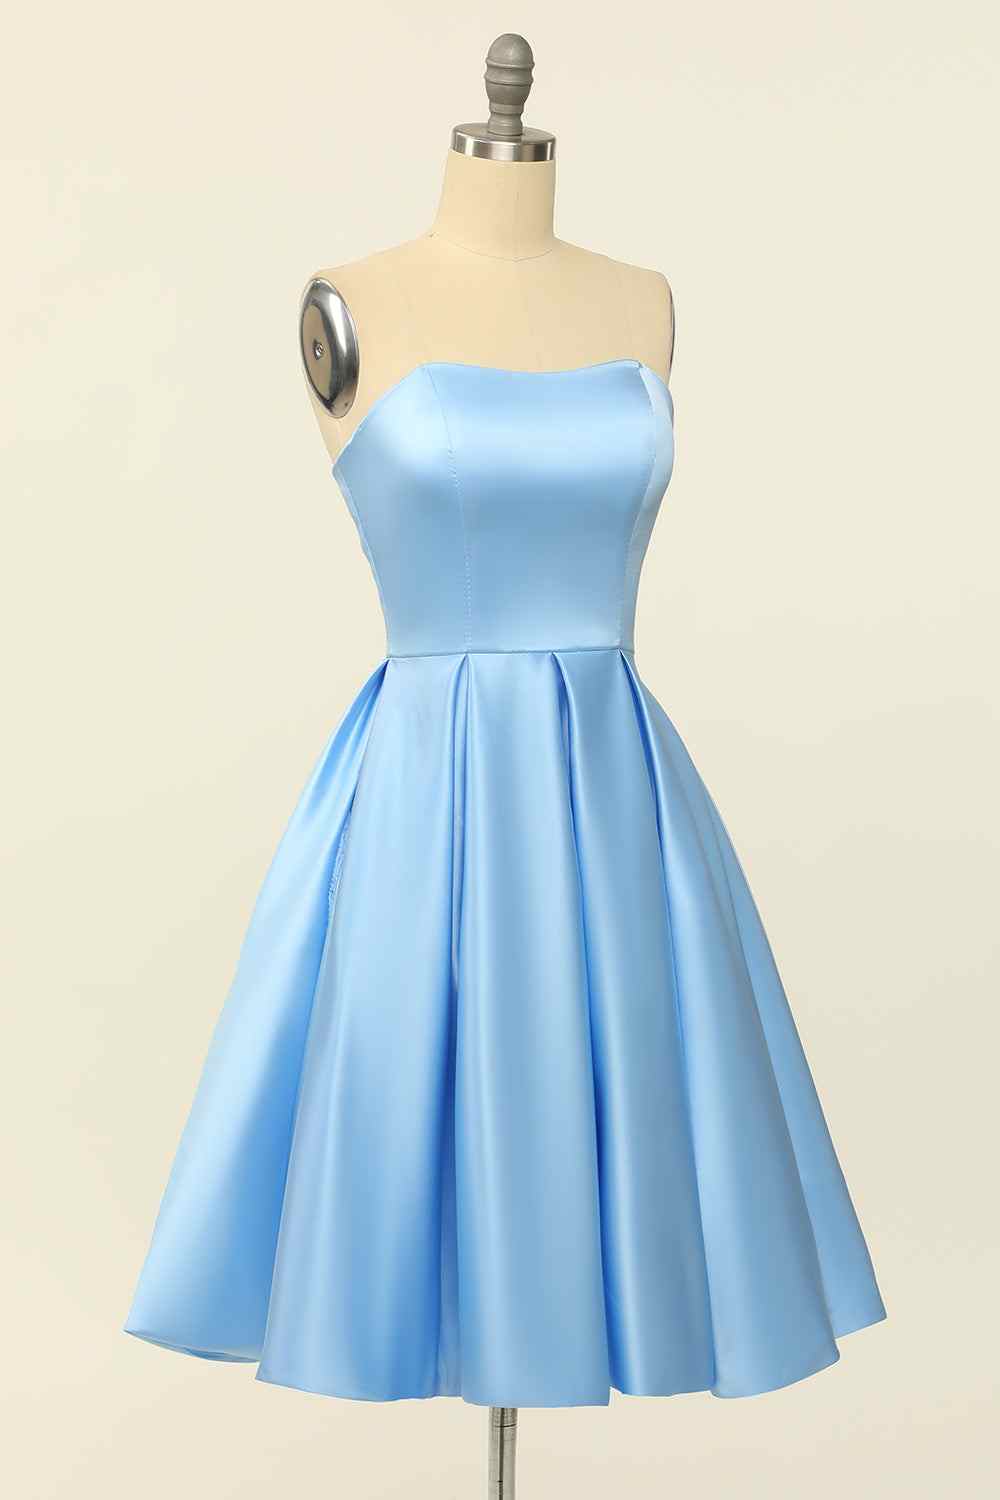 Blue A-line Strapless Satin Mini Homecoming Dress